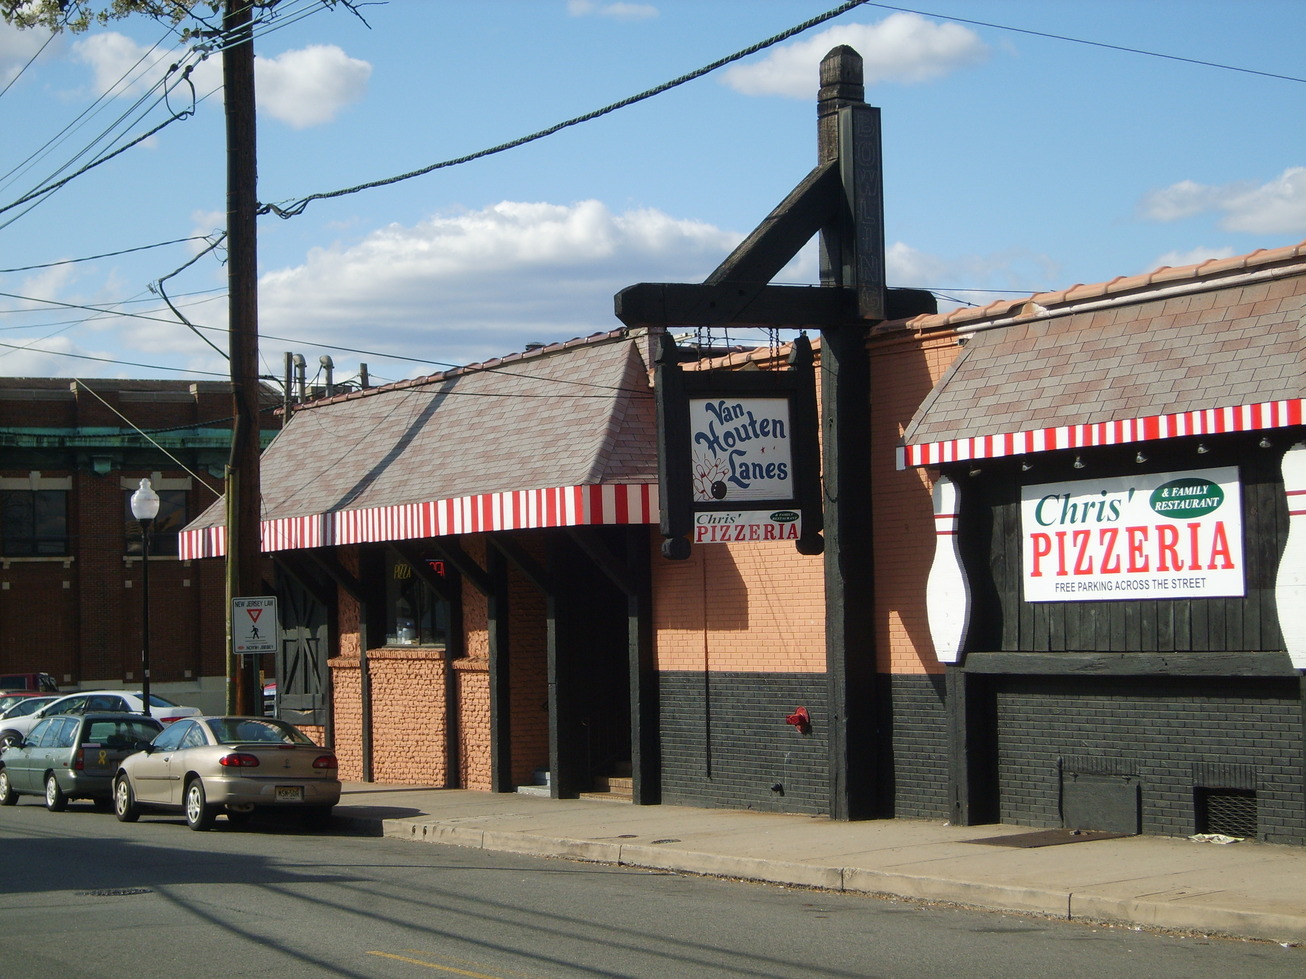 Clifton, NJ: Van Houten Lanes and Chris' Pizzeria on Van Houten Ave